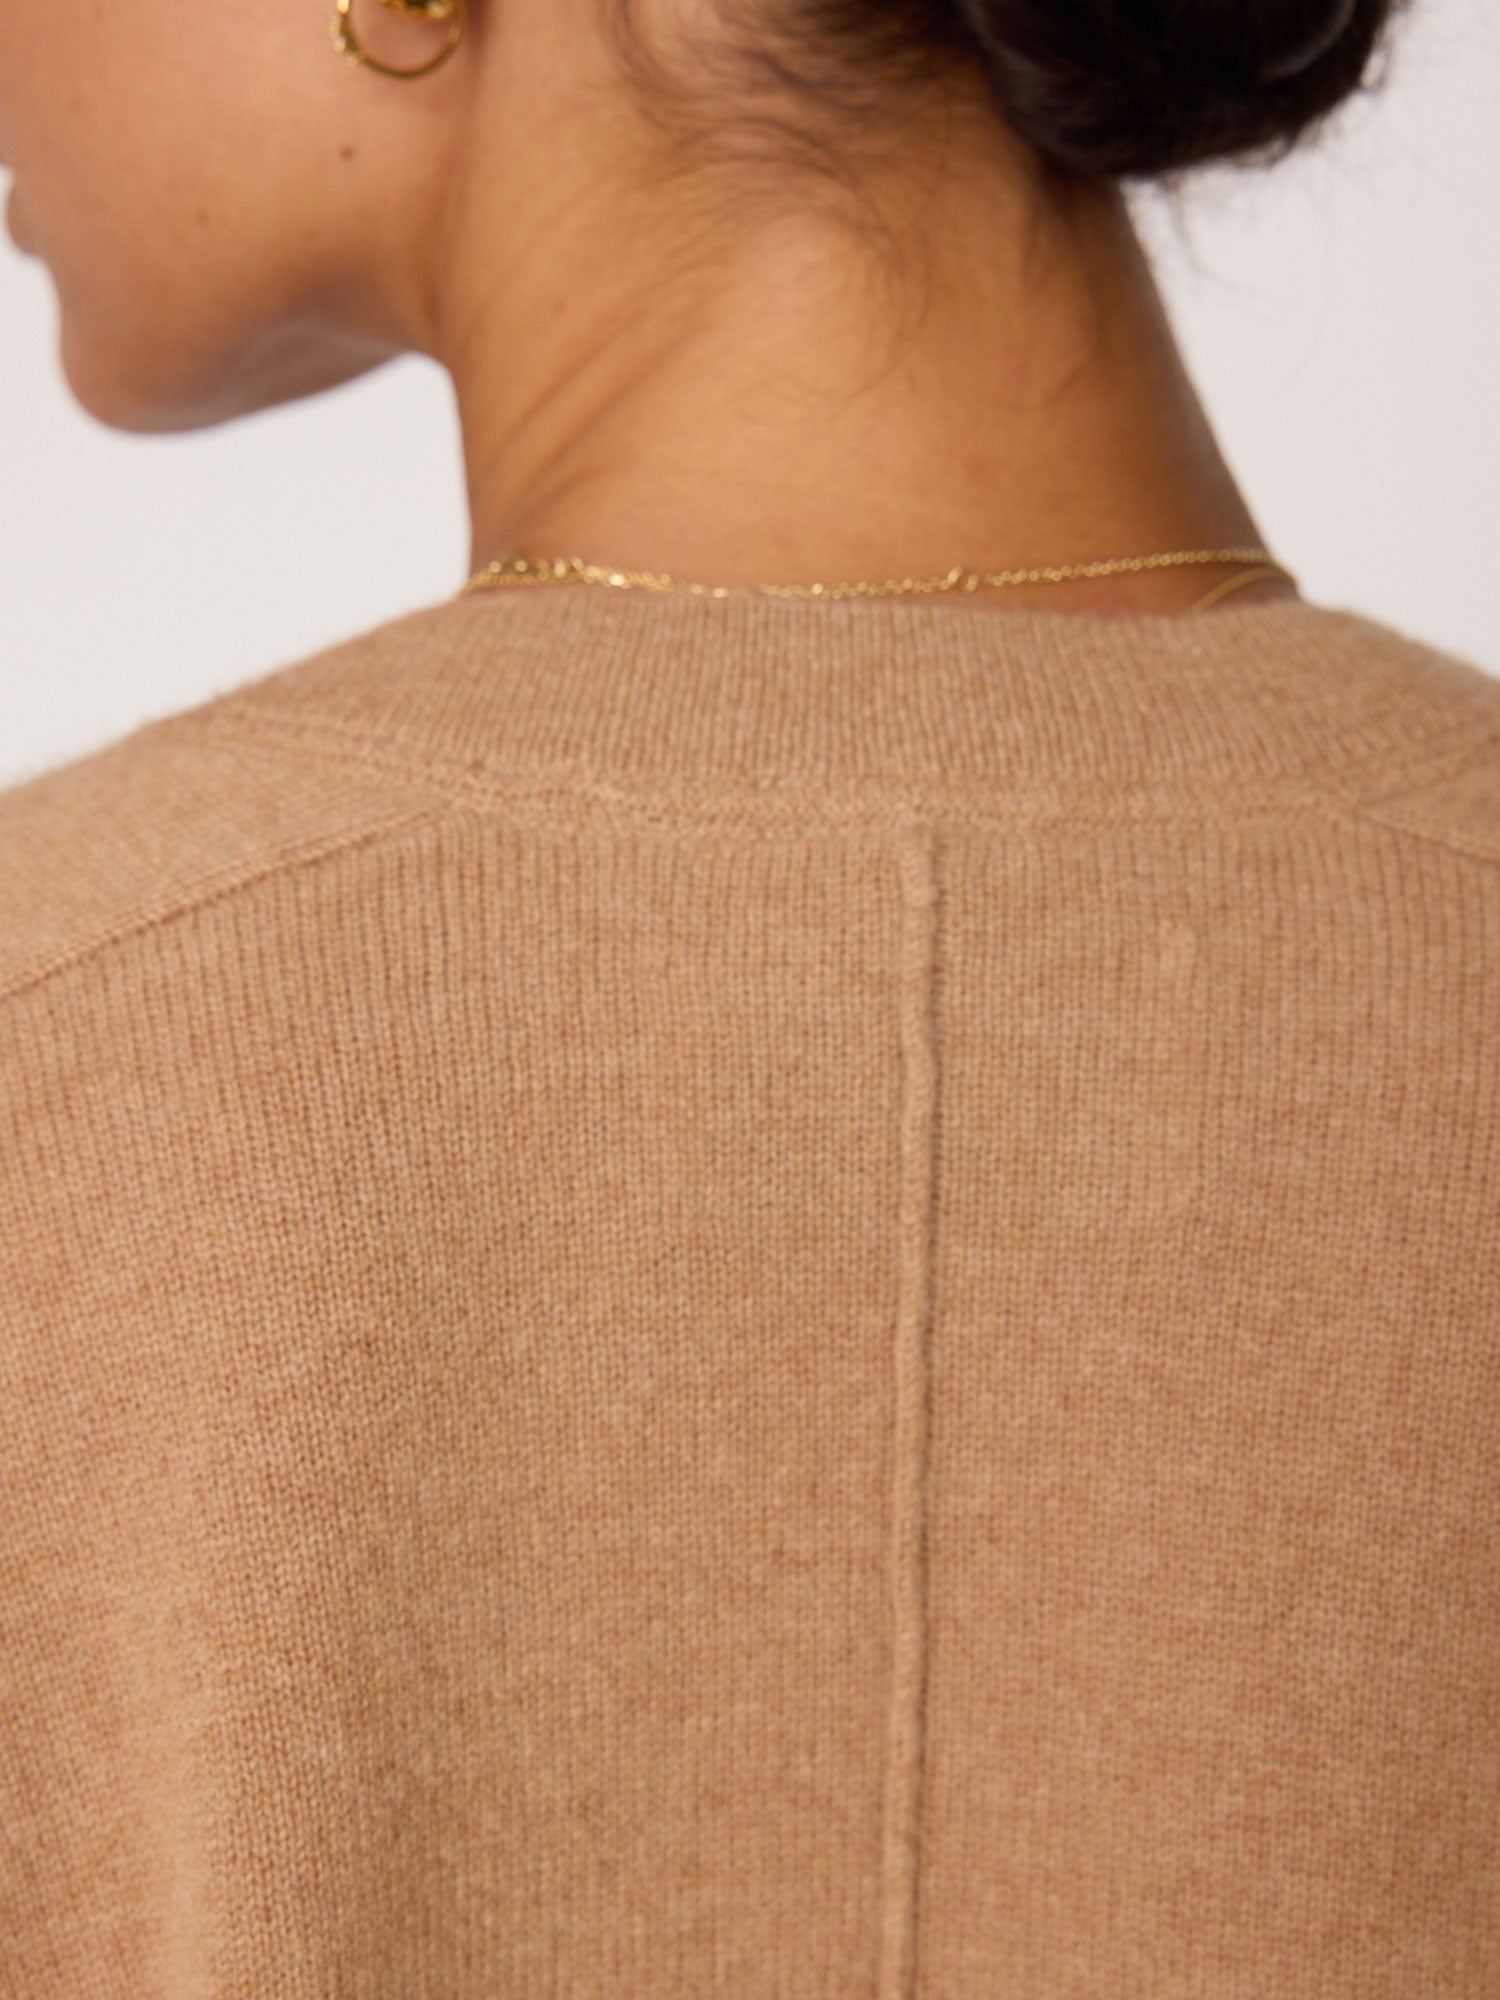 Leia V-neck tan sweater close up